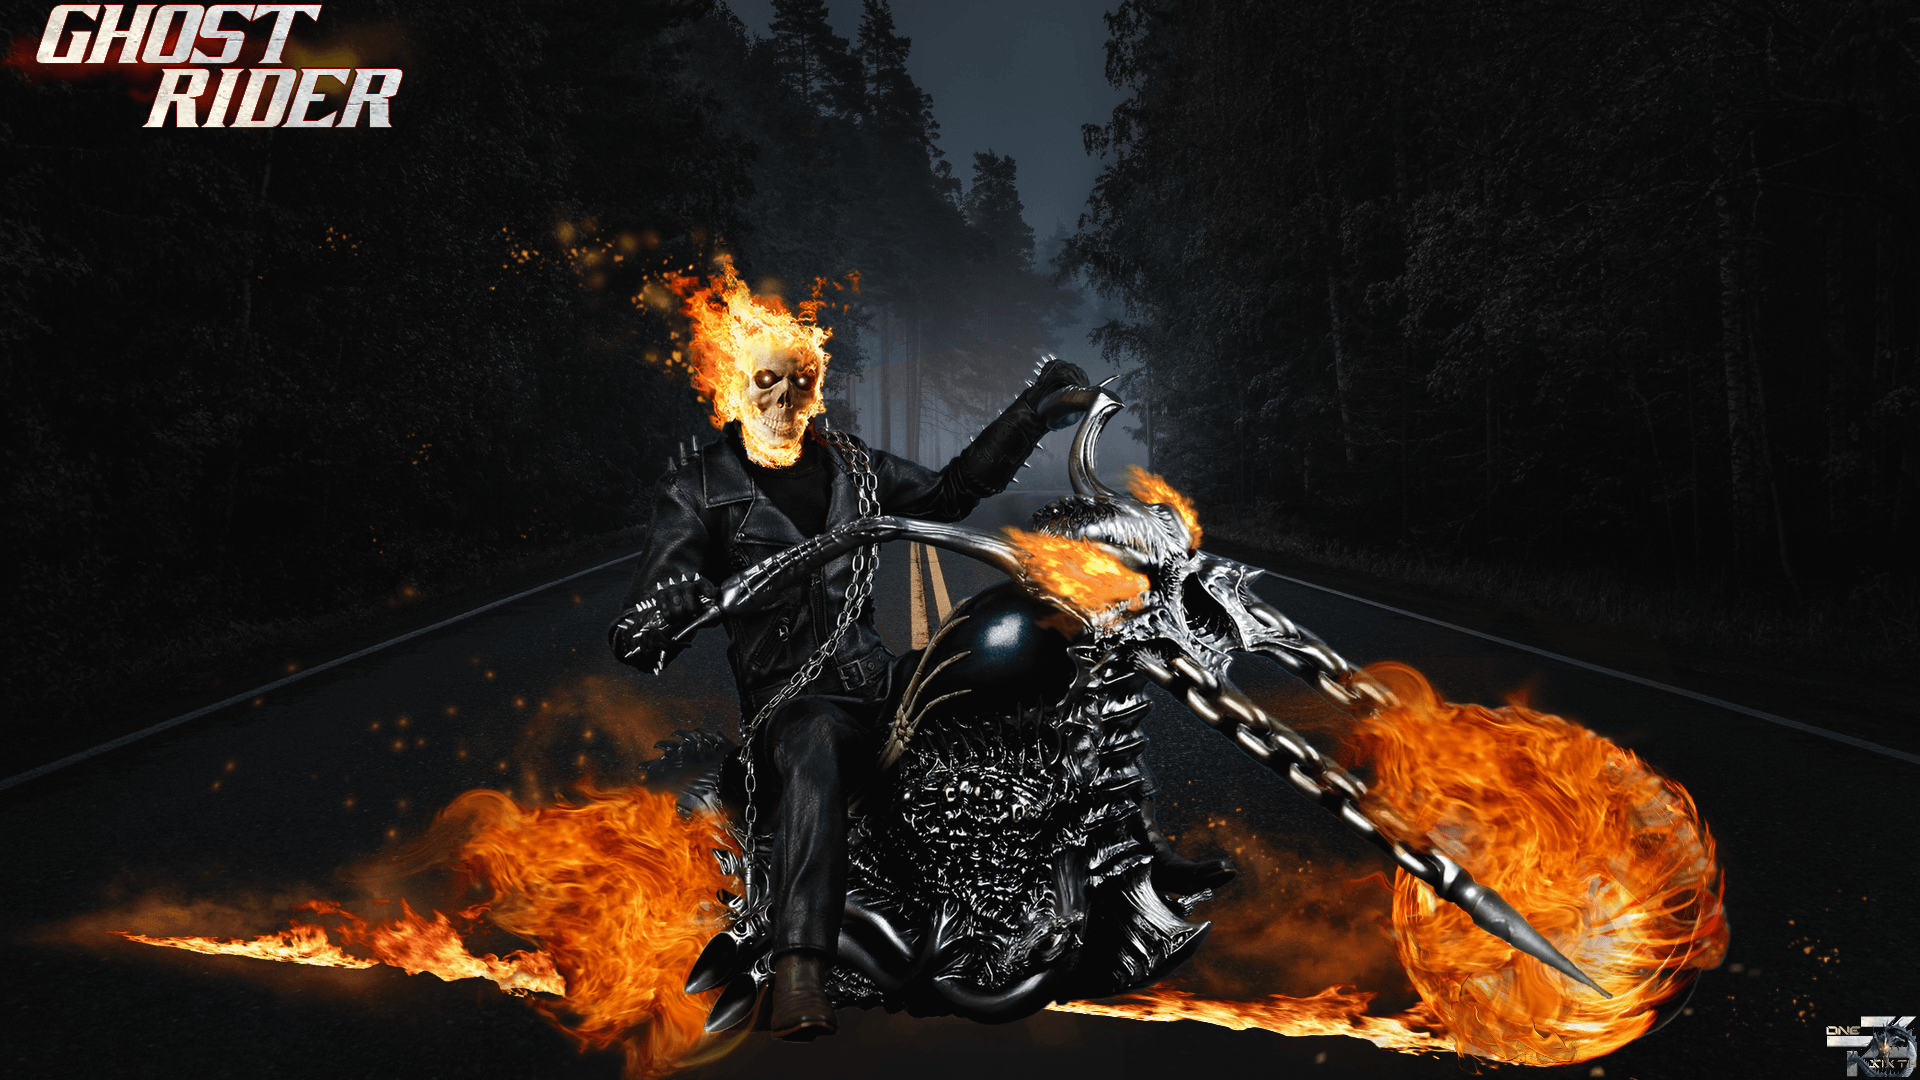 Ghost rider full HD wallpaper download